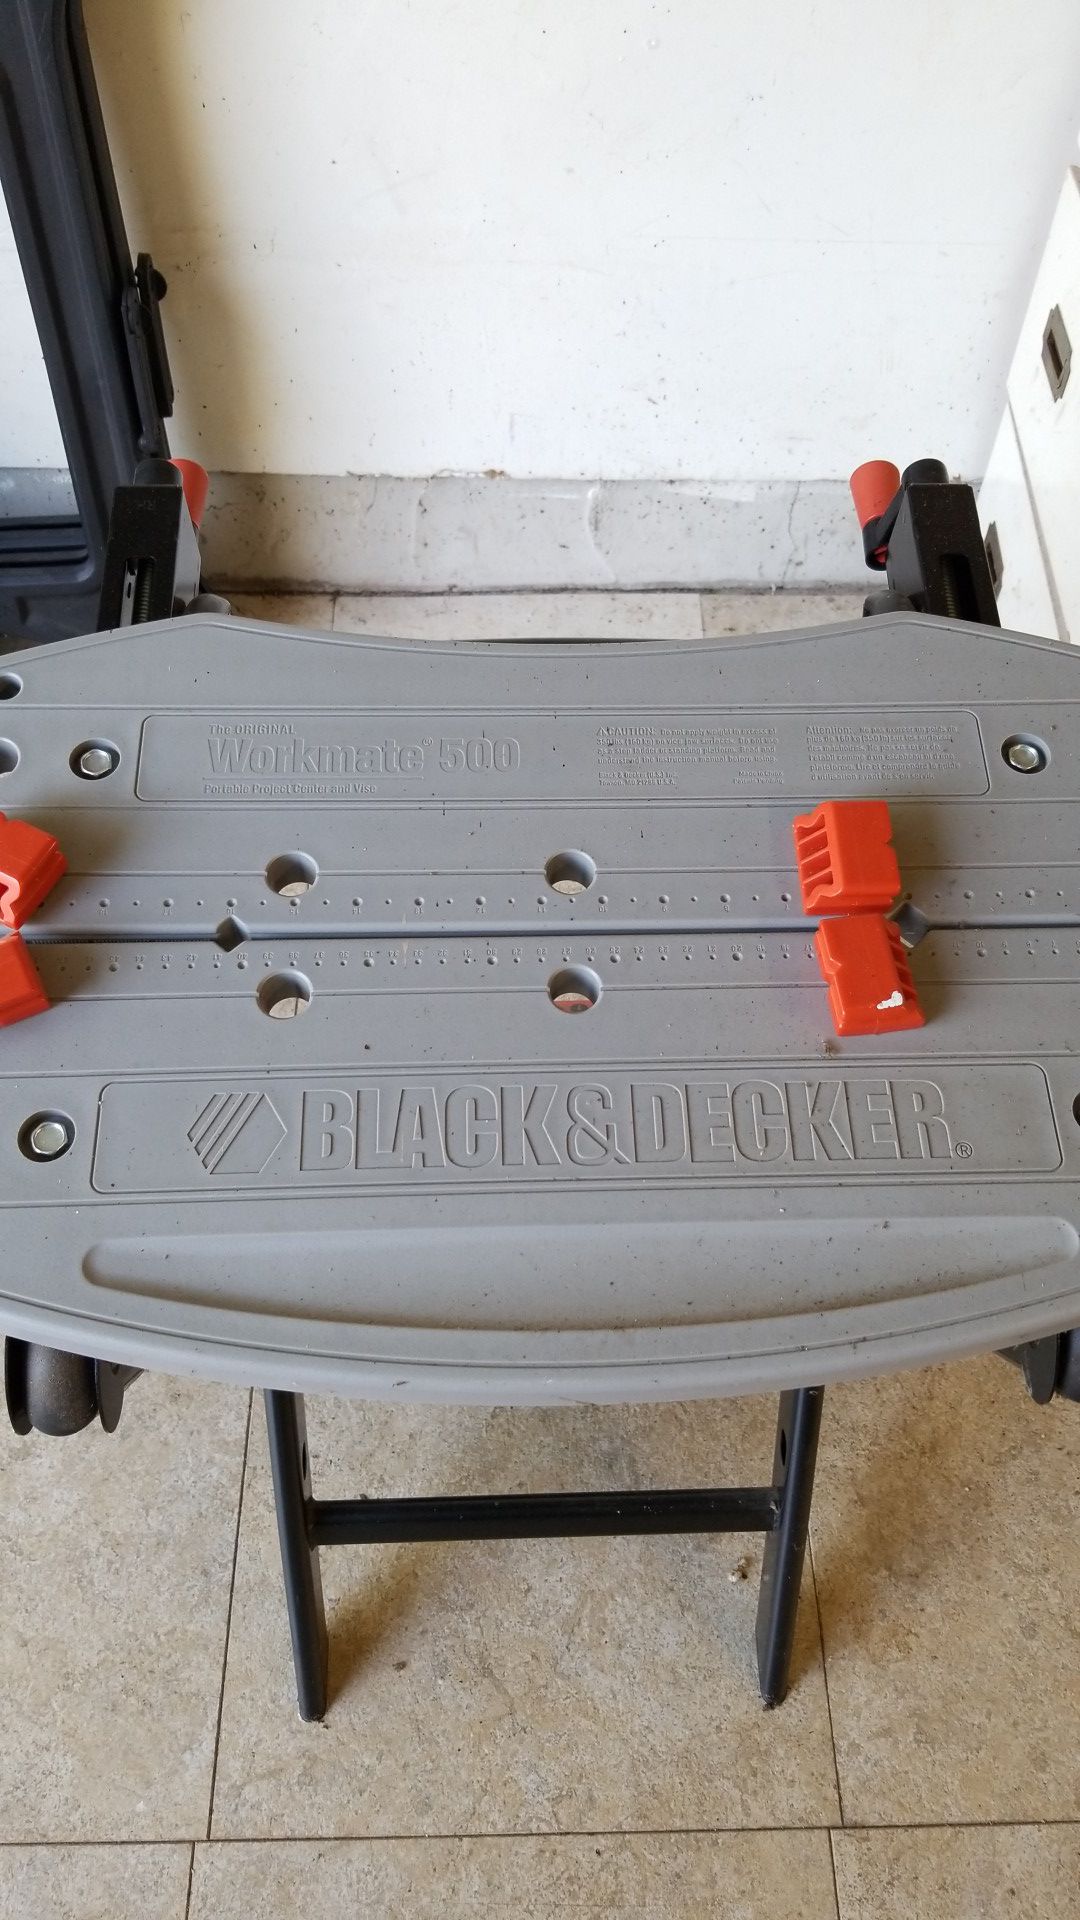 Black & Decker Kids Workbench for Sale in Annandale, VA - OfferUp